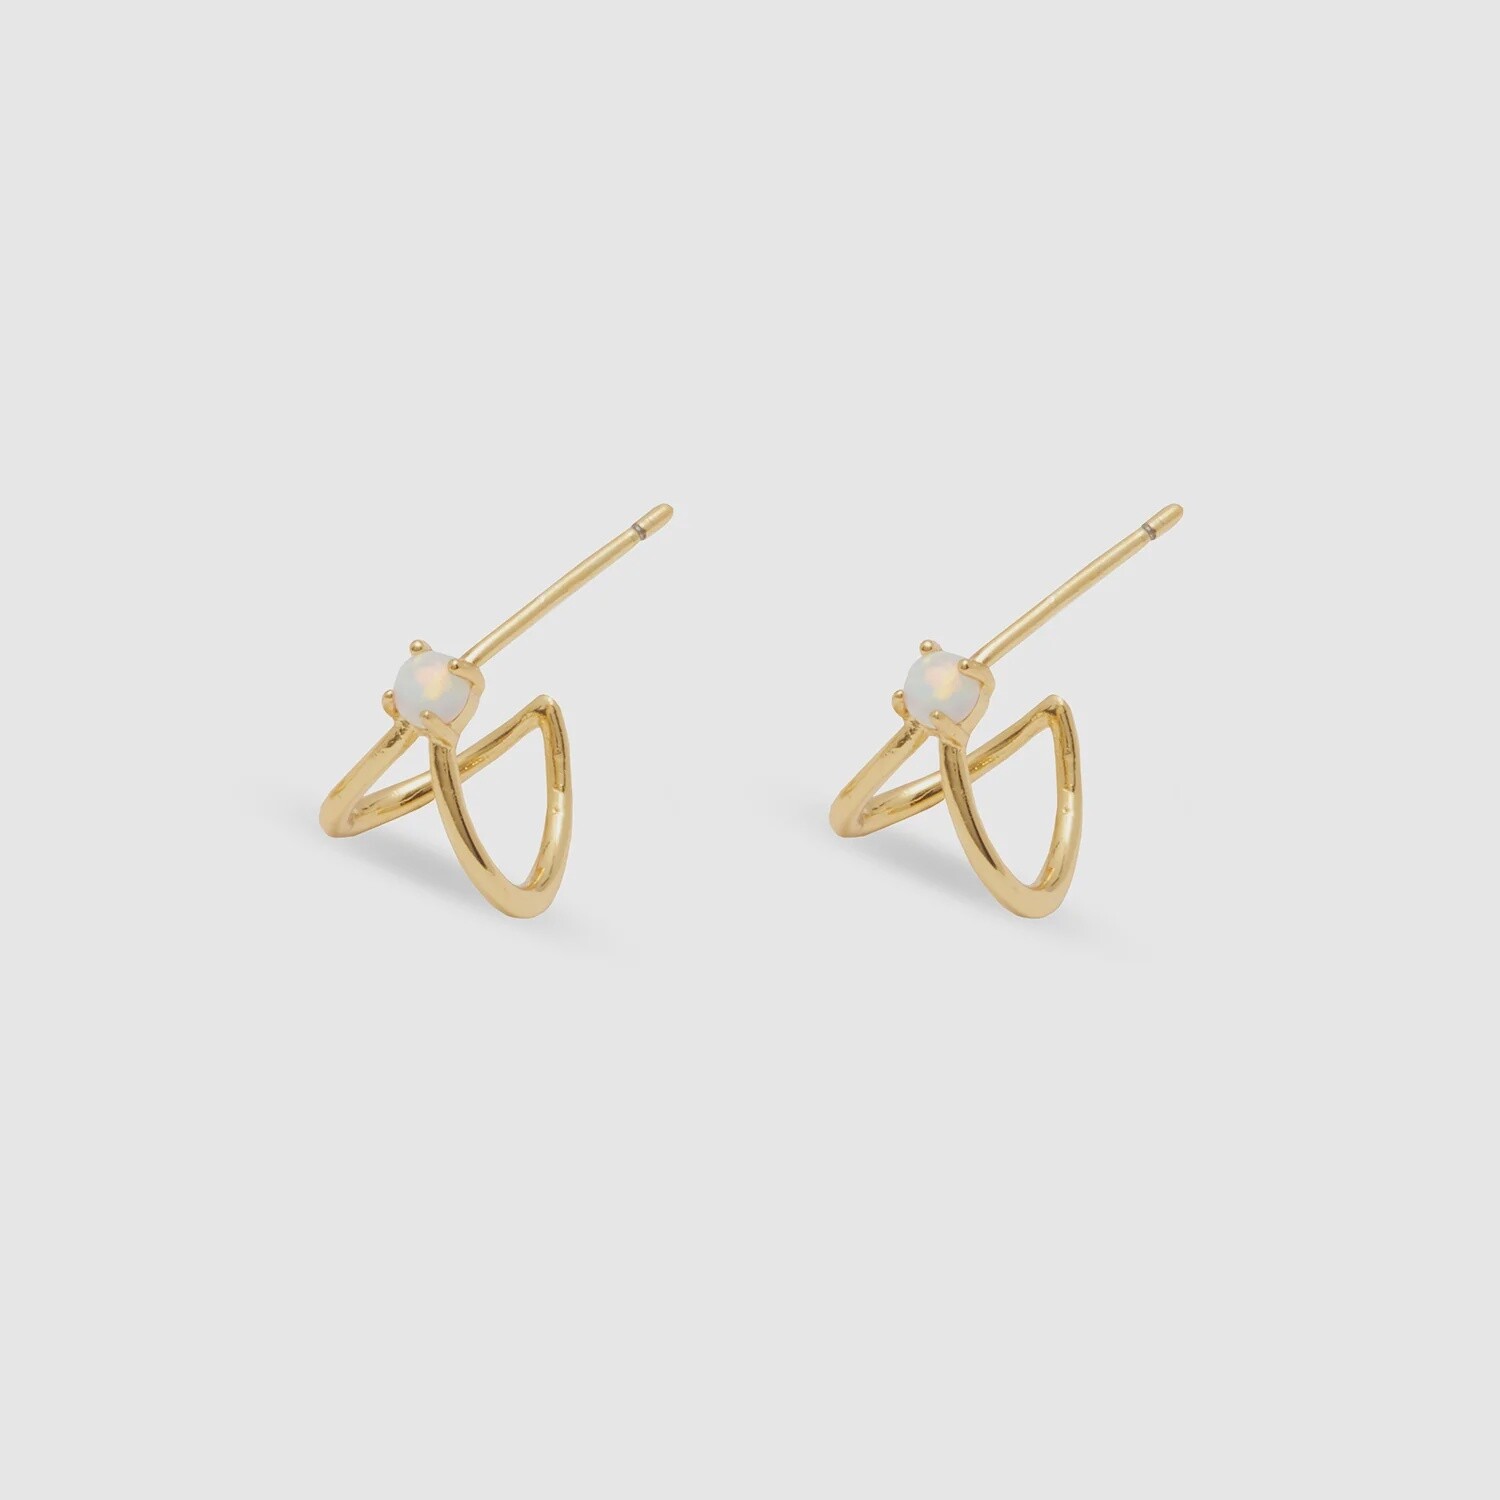 Opalite Solitaire Double Huggies - Gold / Opalite Earrings